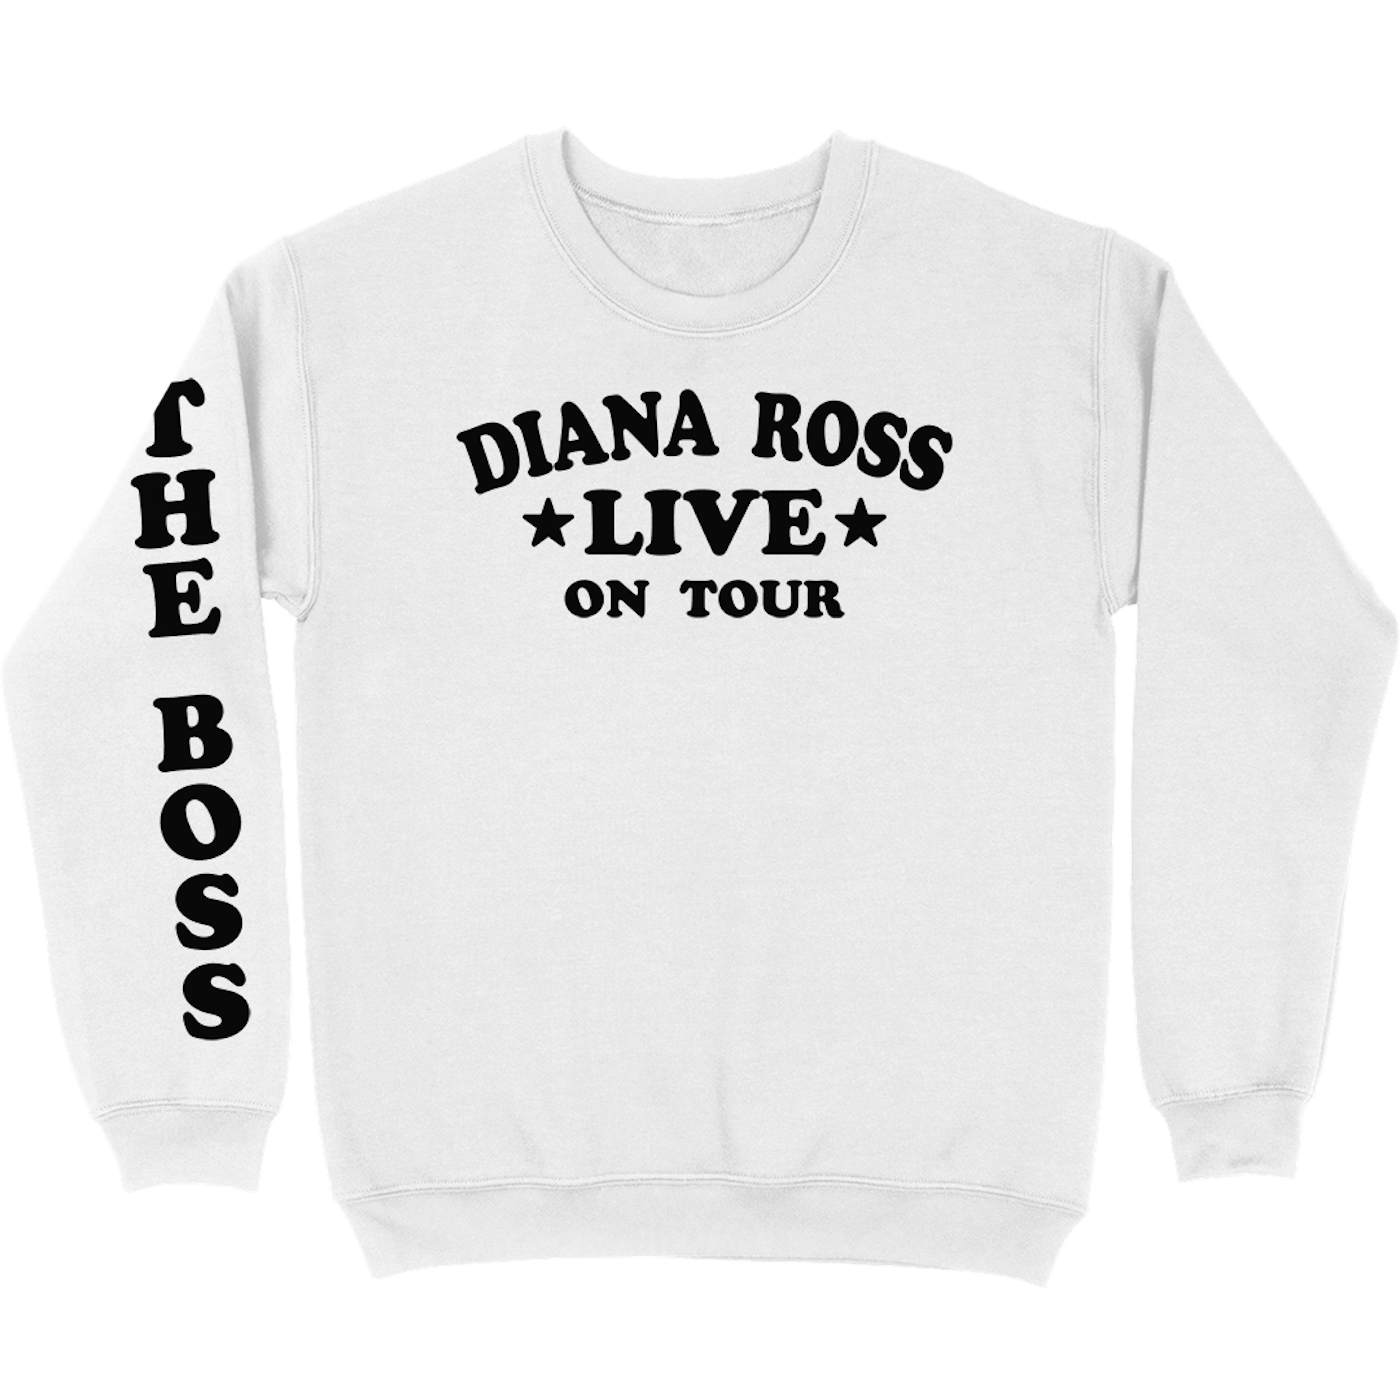 Diana Ross "Live On Tour" Crewneck Sweatshirt in White